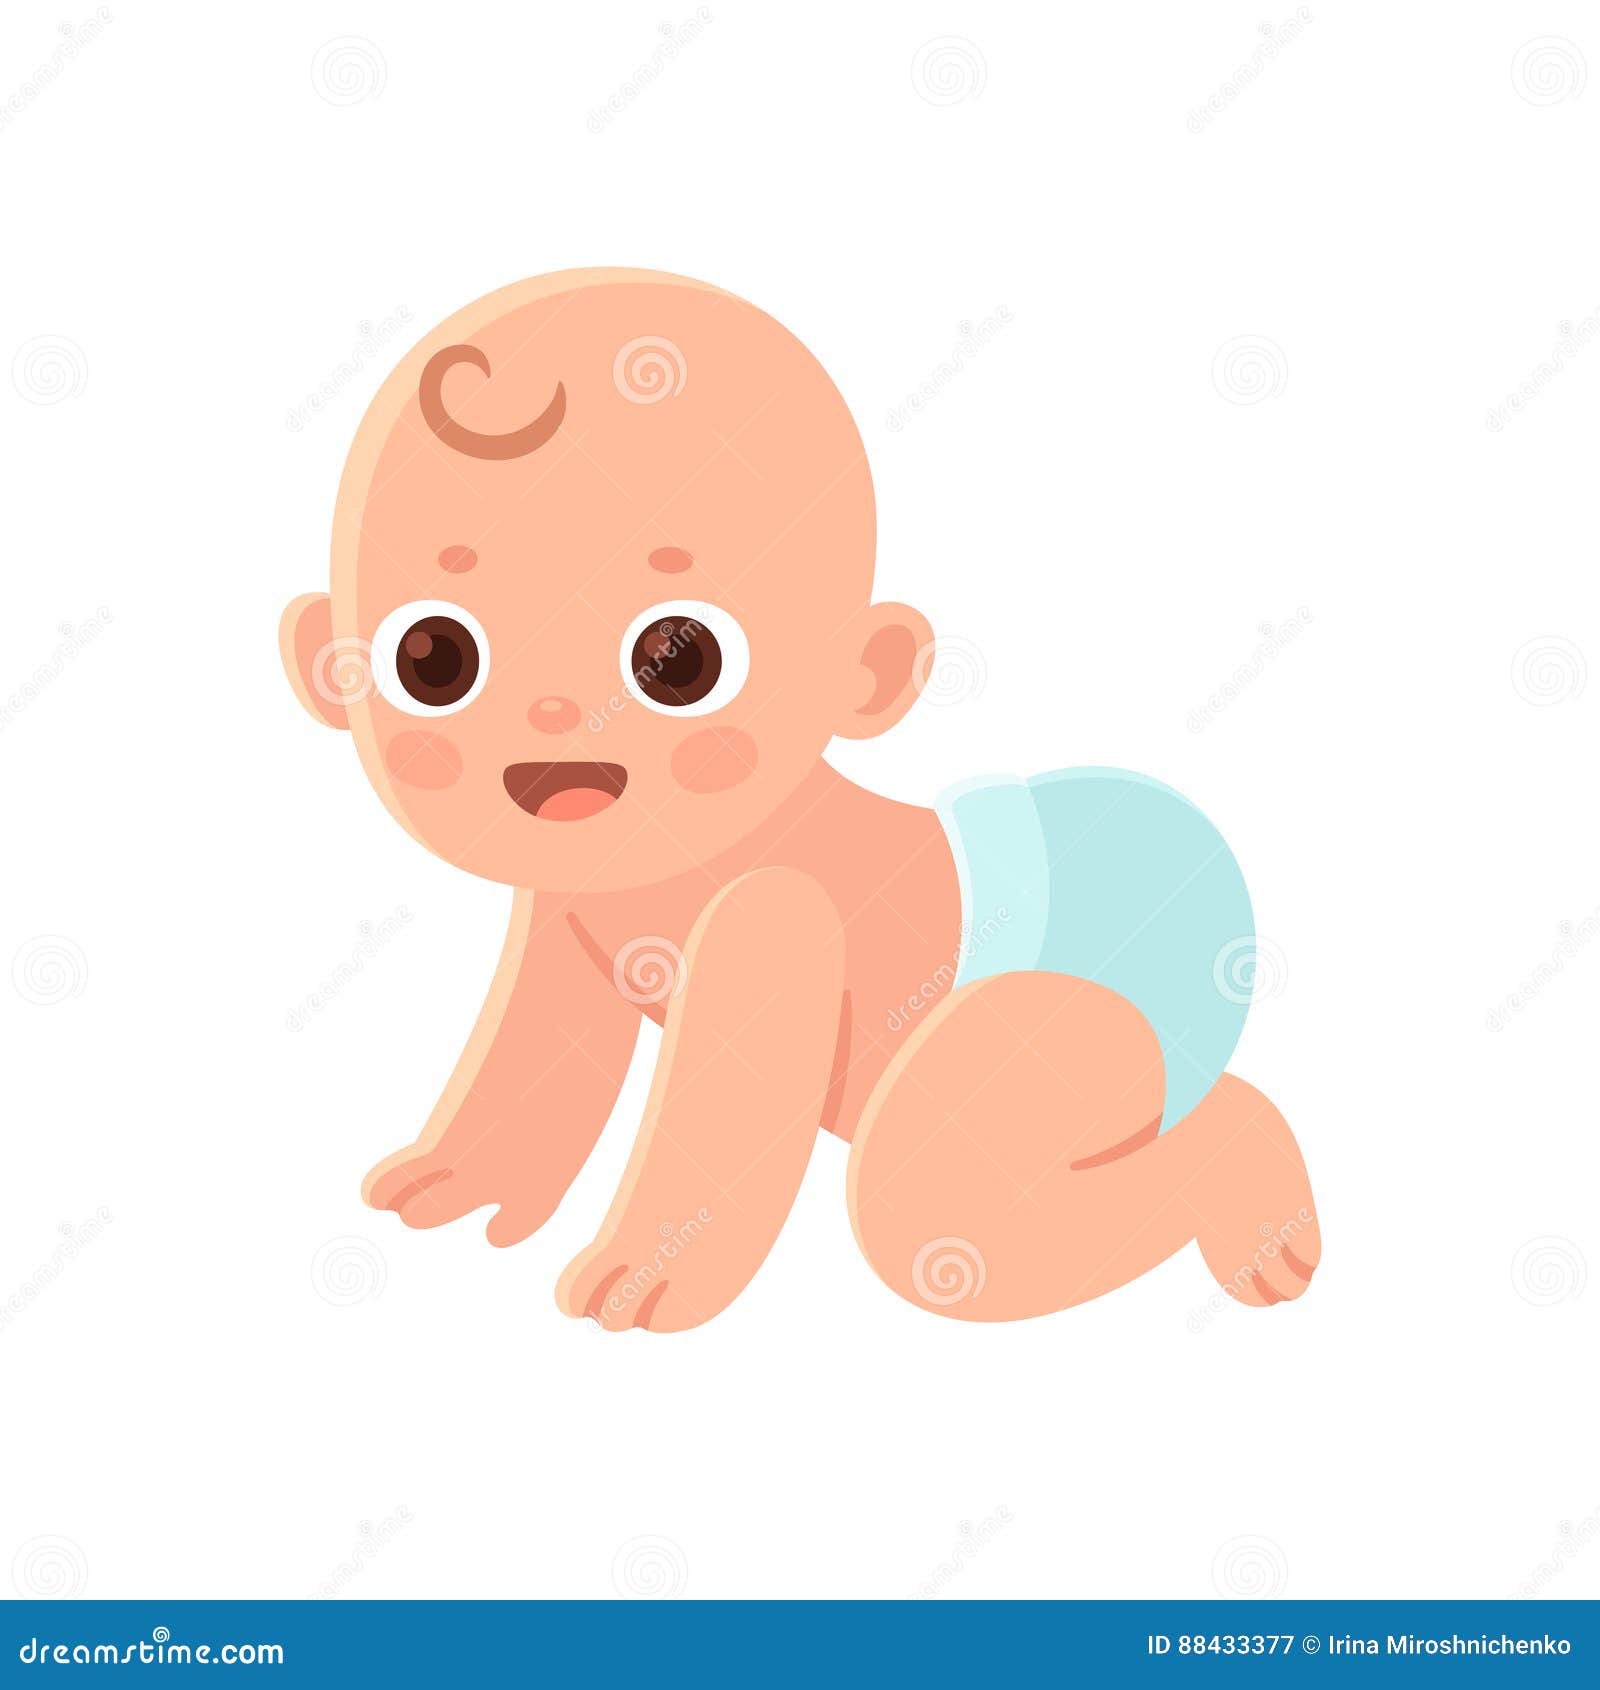 Cute cartoon baby stock vector. Illustration of motherhood - 88433377